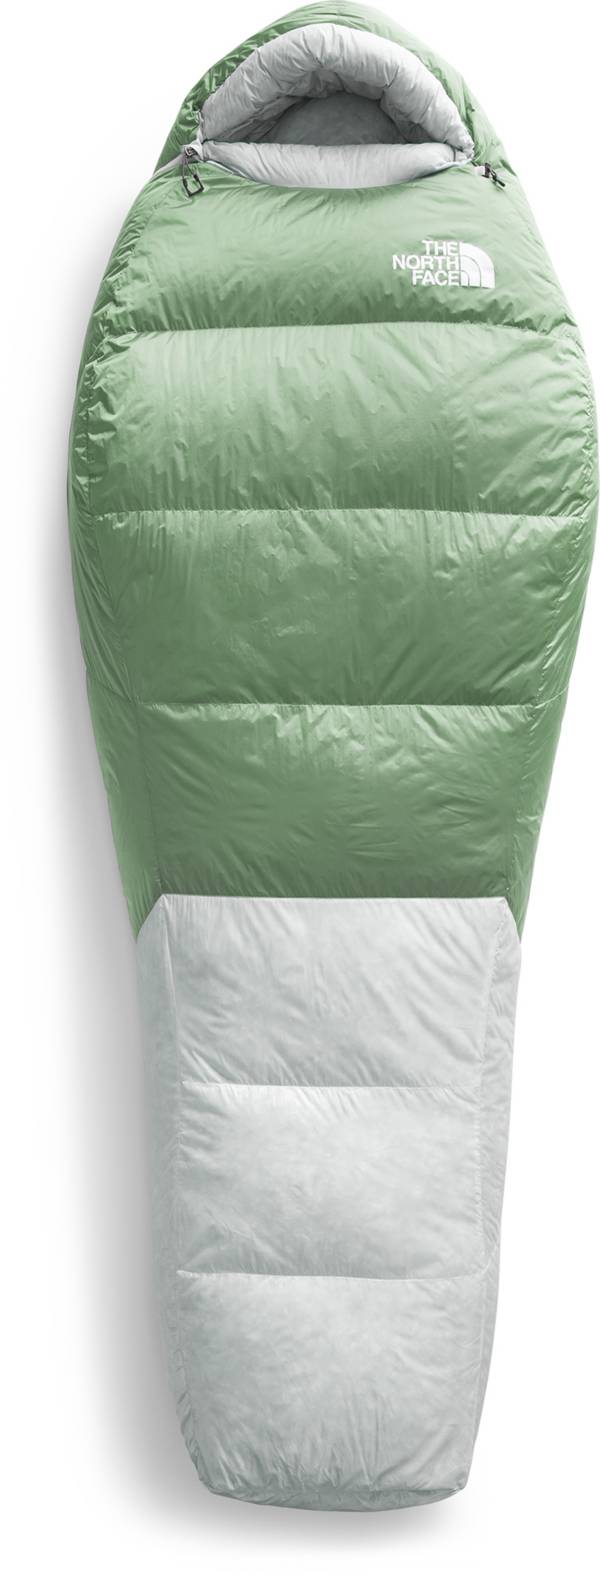 The North Face Green Kazoo Eco 0 Sleeping Bag product image